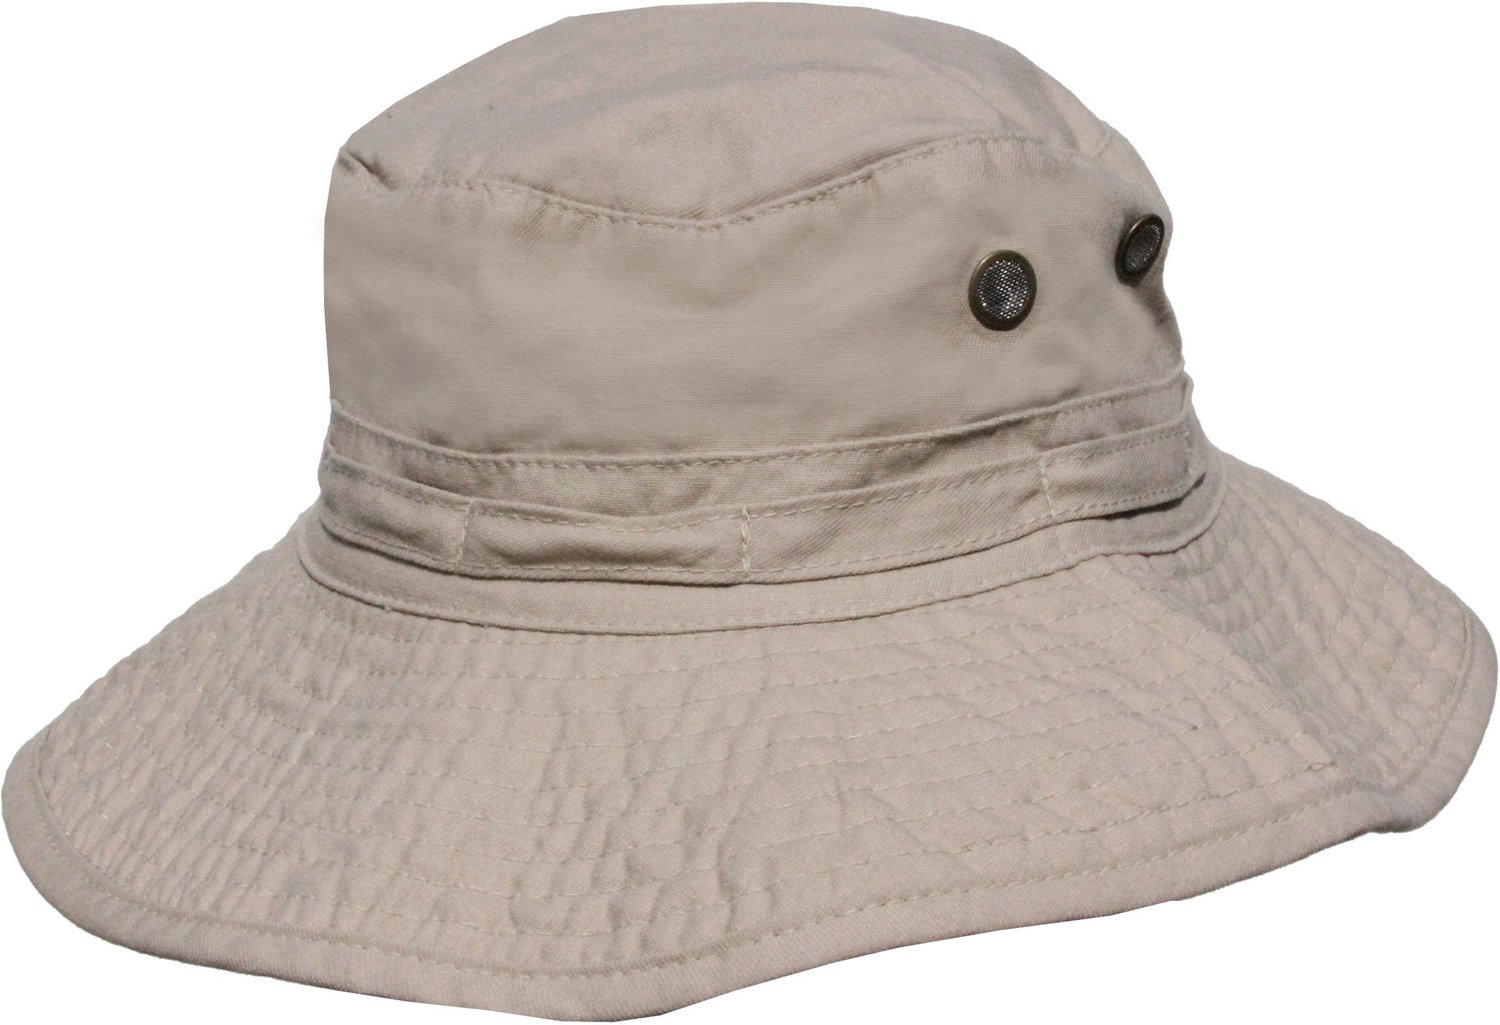 Academy Sports + Outdoors Magellan Outdoors Women's Bucket Hat